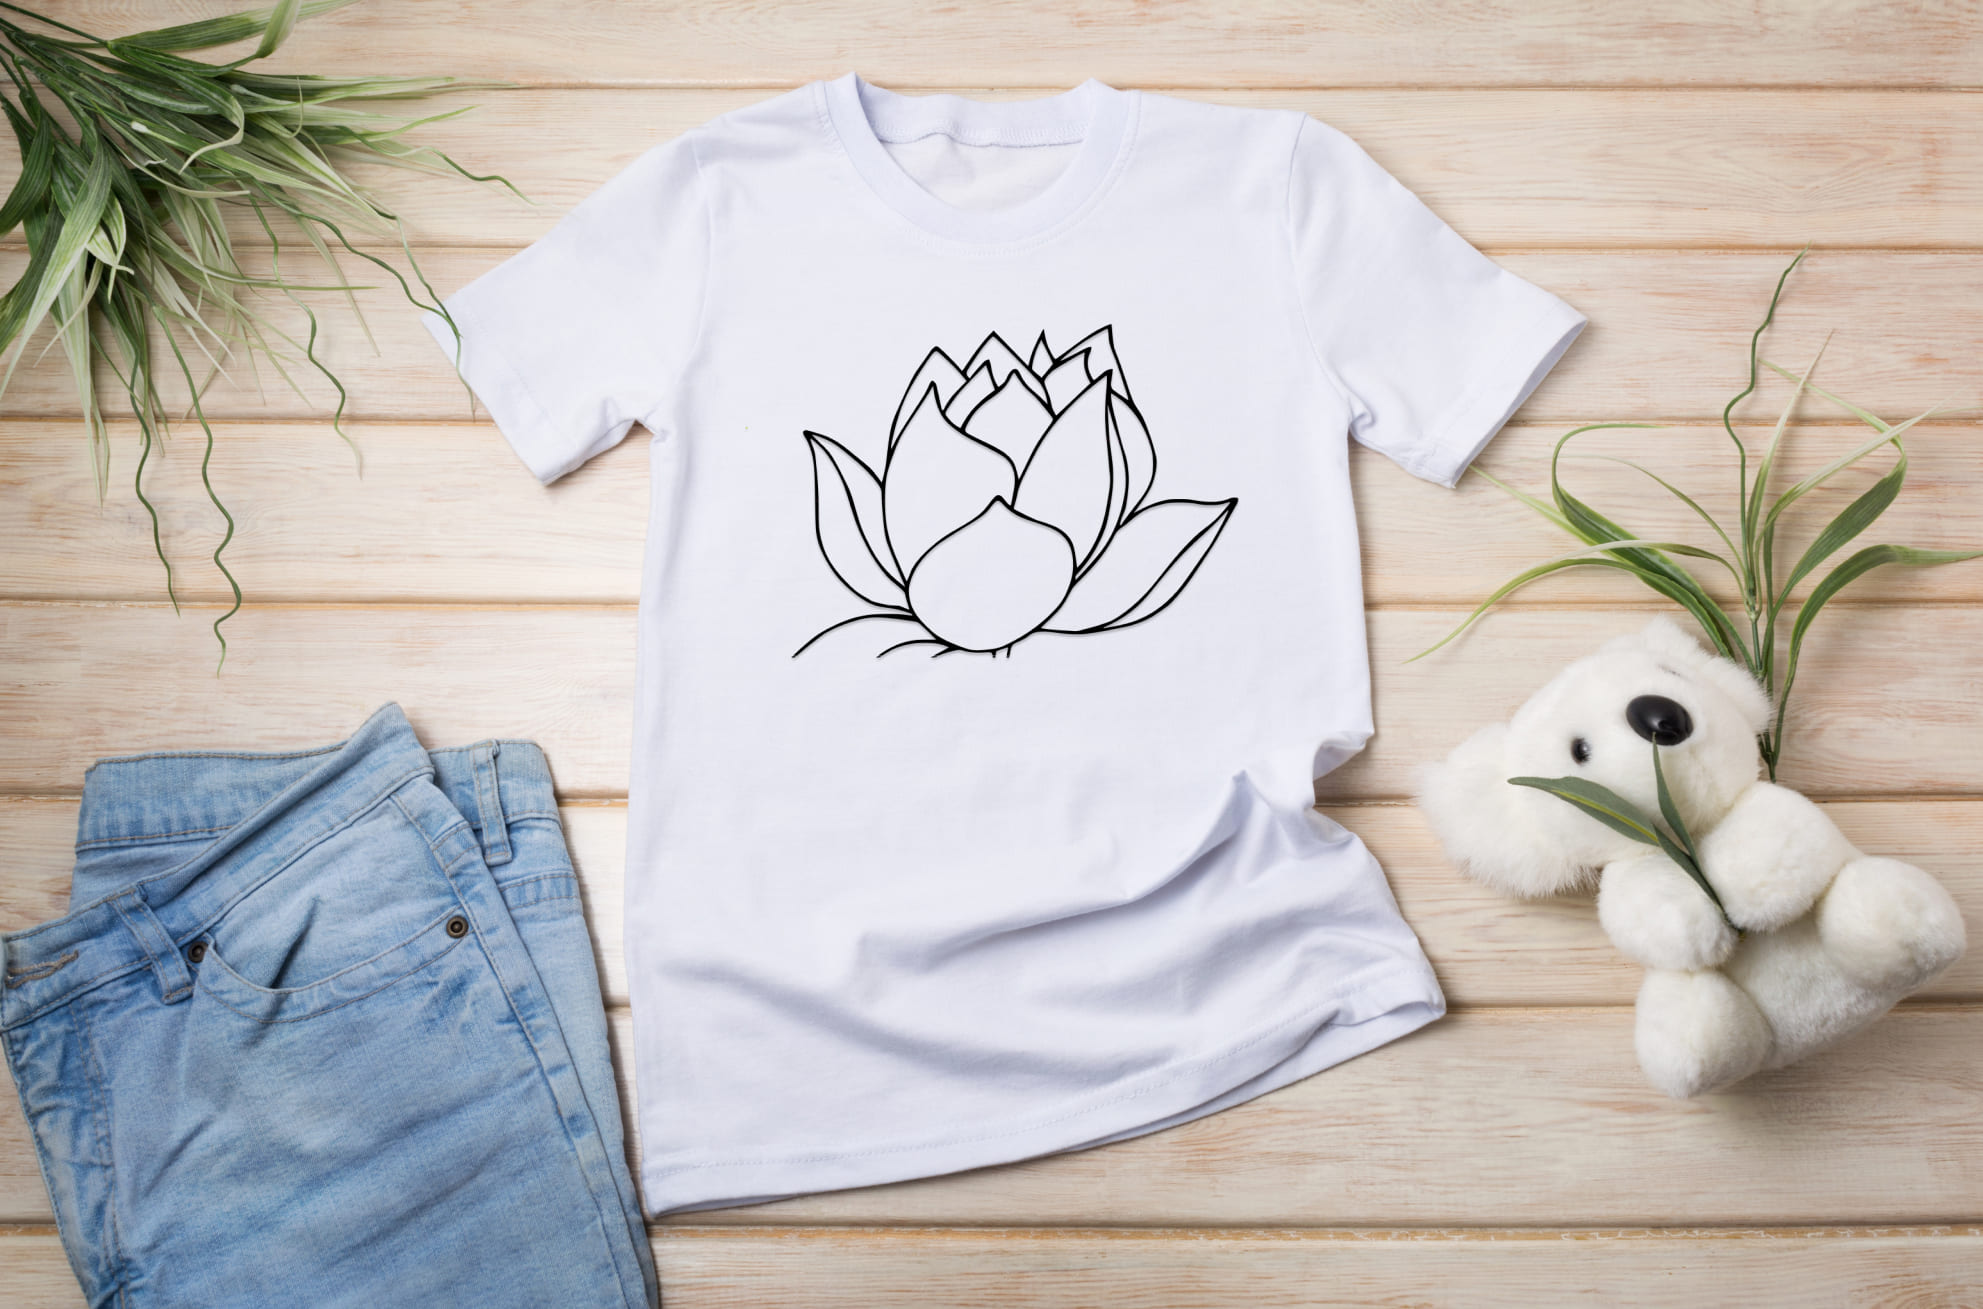 Blossom lotus on the t-shirt.